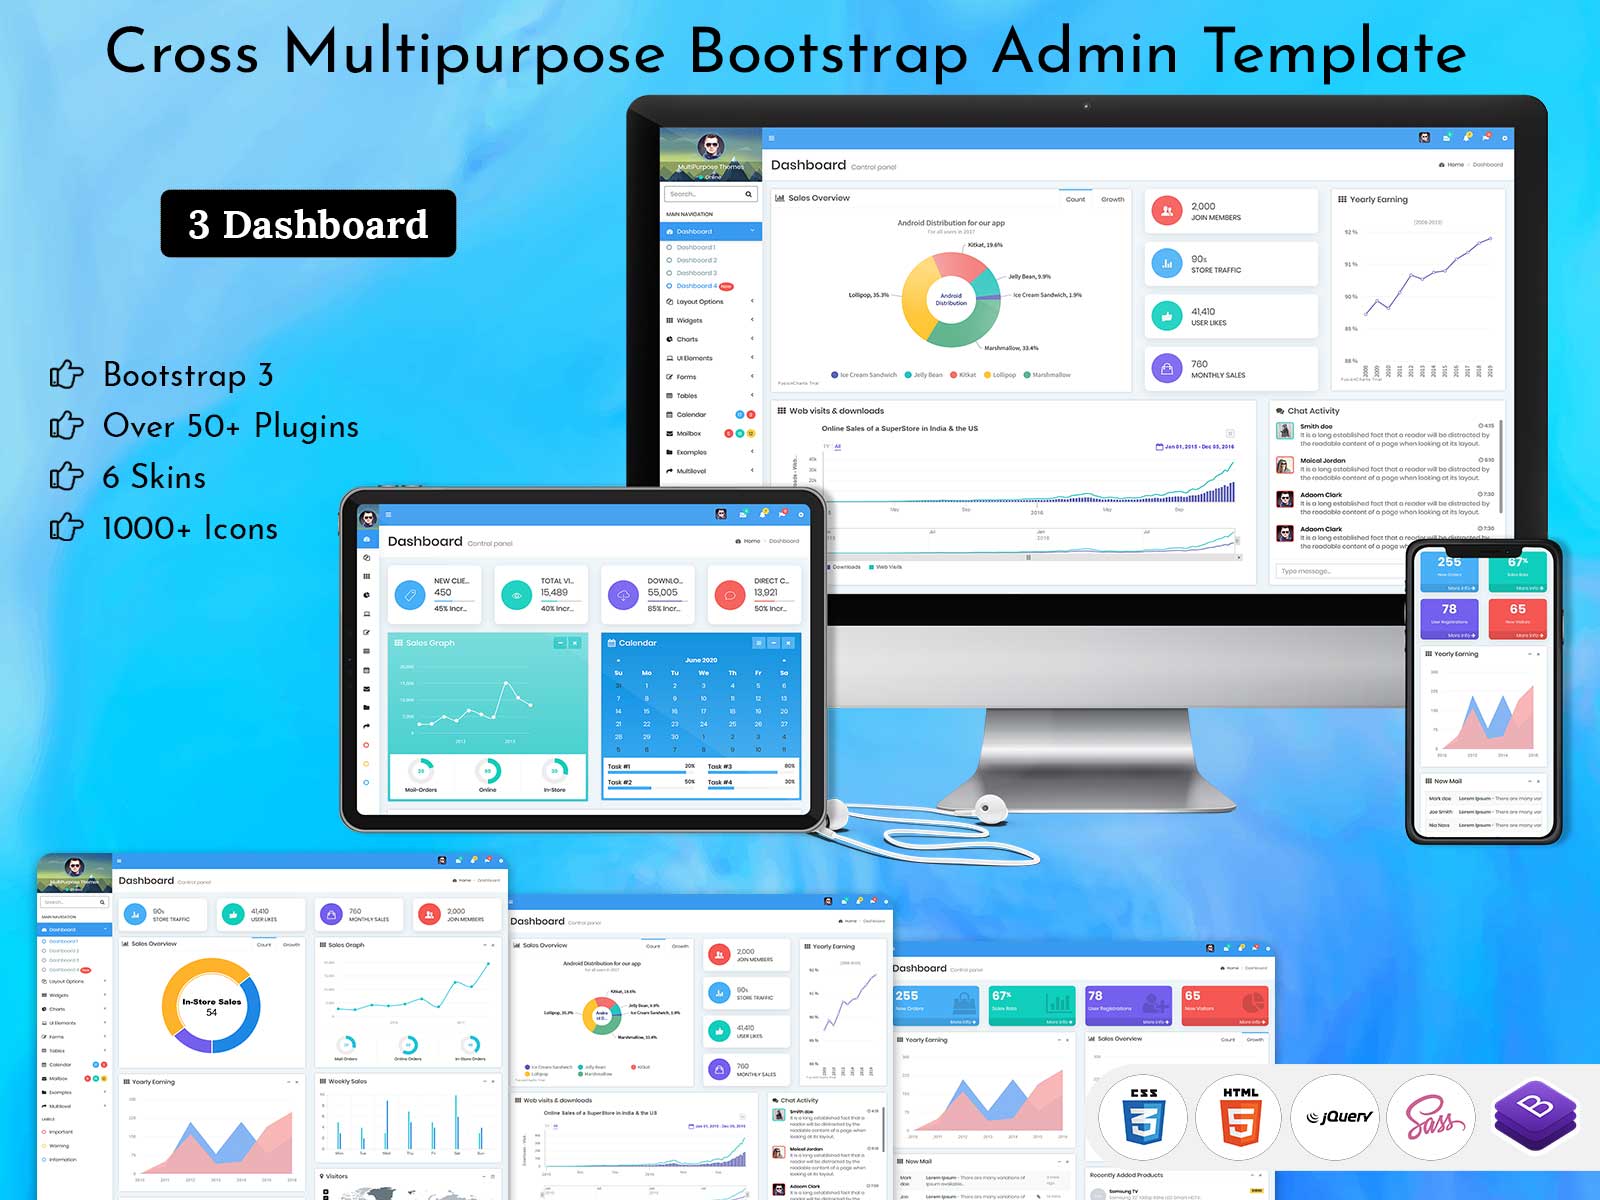 Cross Multipurpose Bootstrap Admin Template